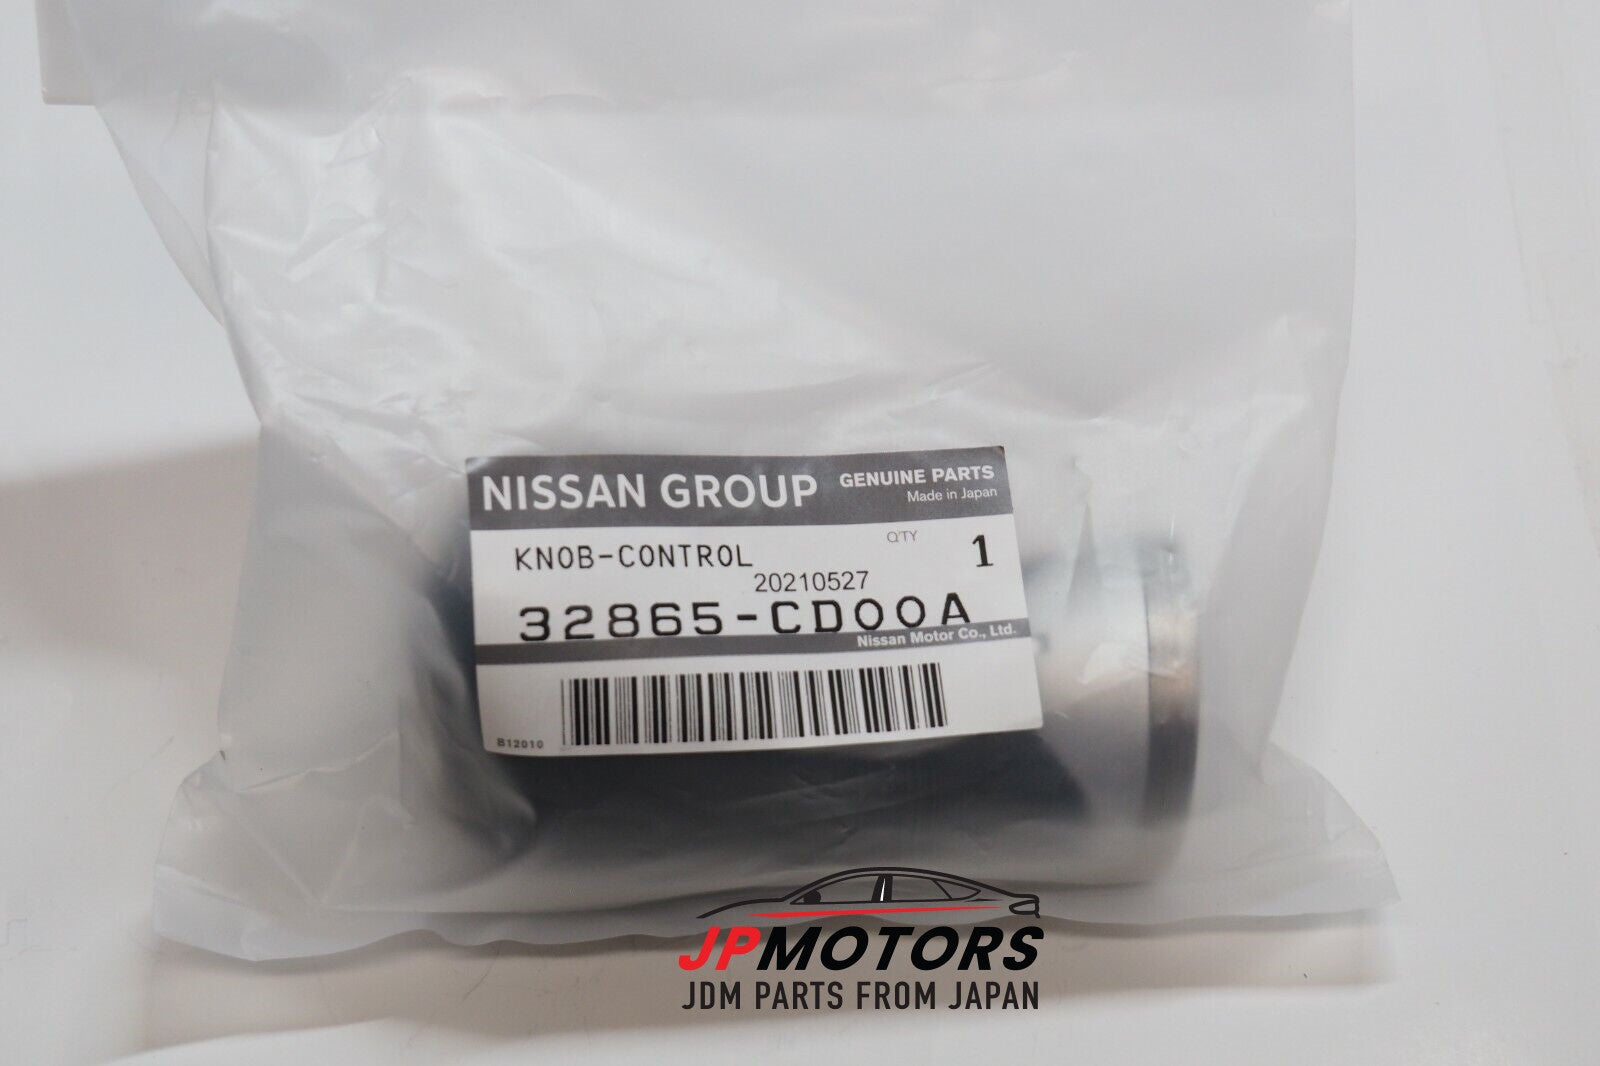 Nissan Genuine Fairlady Z Z33 350Z Shift Knob Leather Black 6MT 32865-CD00A ★